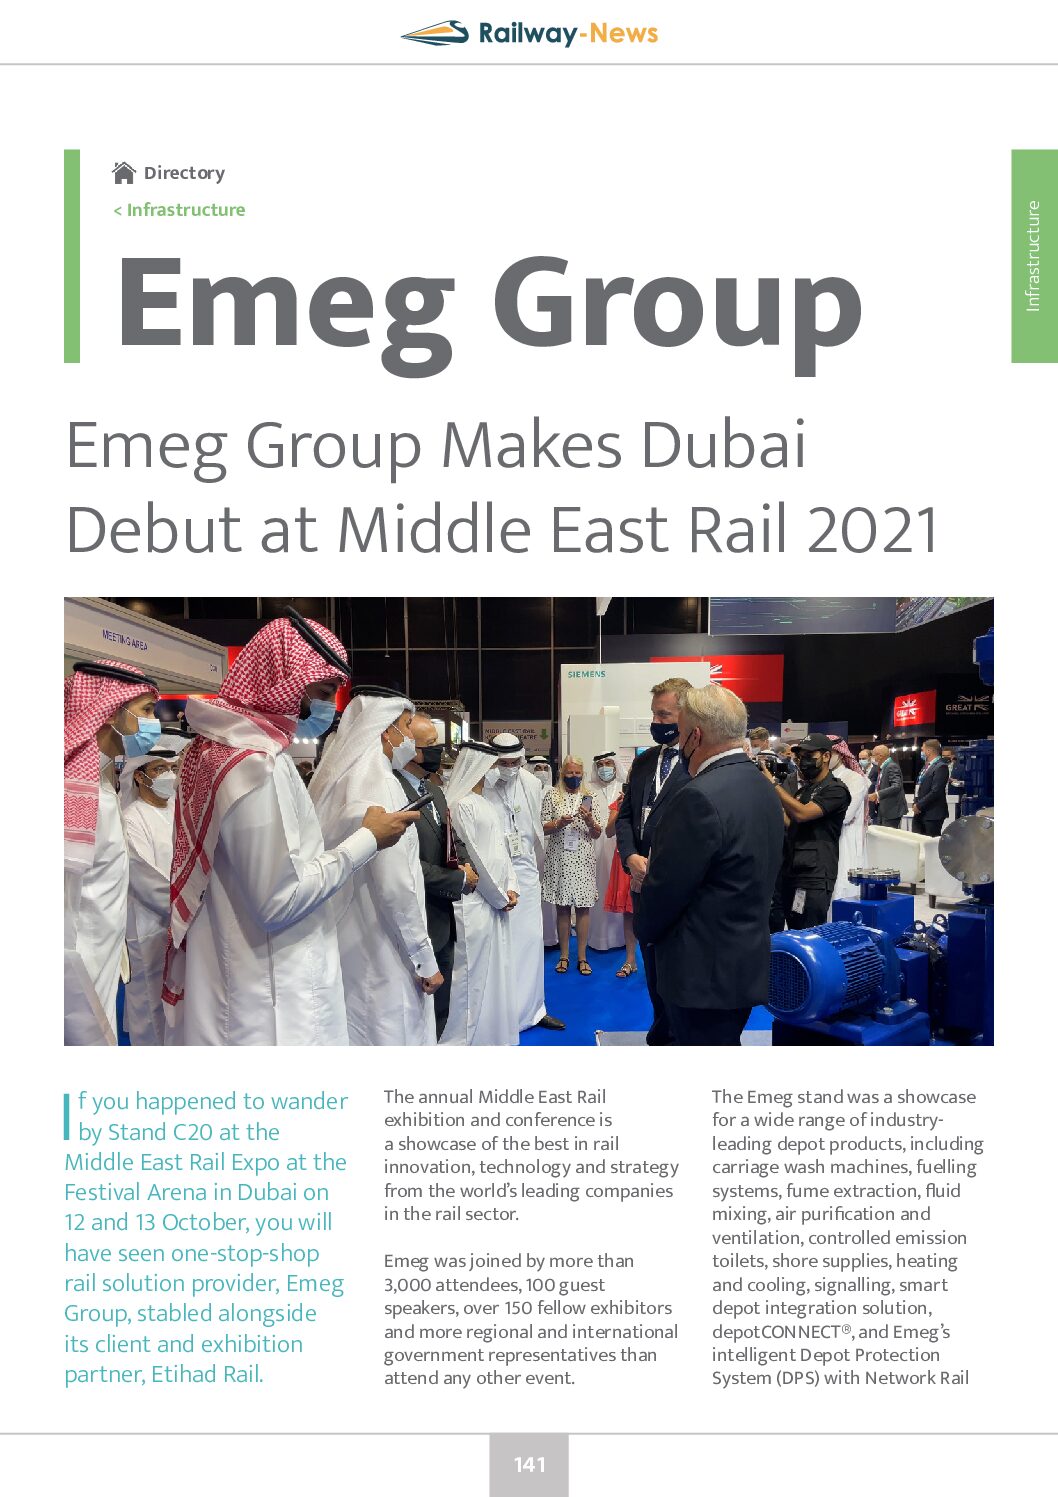 Emeg® Group Makes Dubai Debut at Middle East Rail 2021